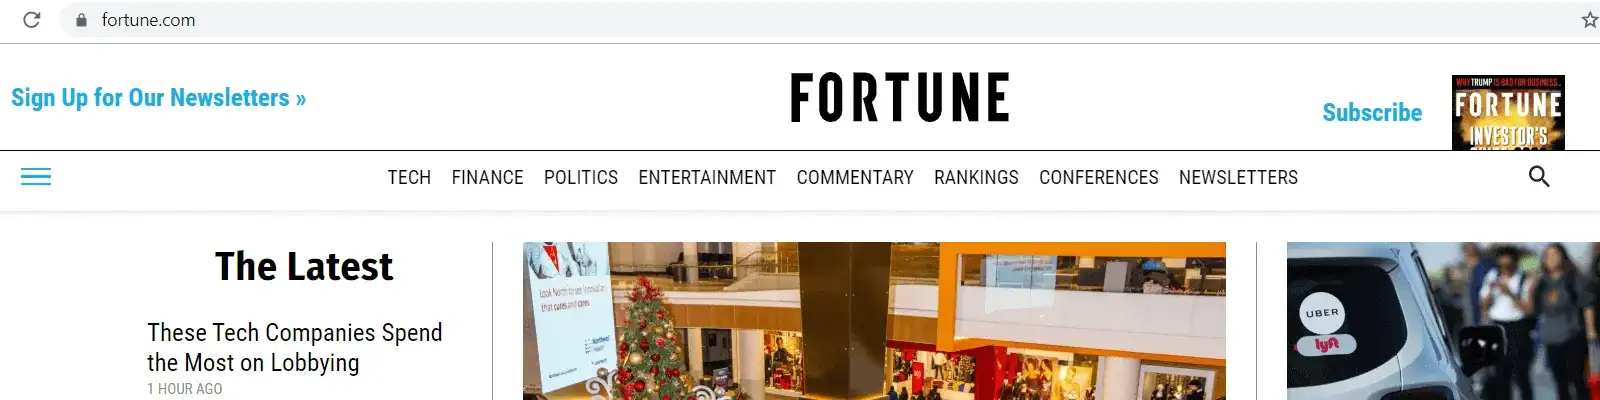 FinancePlusInsurance.com-Wikipedia-Fortune-Top-Business-Magazines-in-India